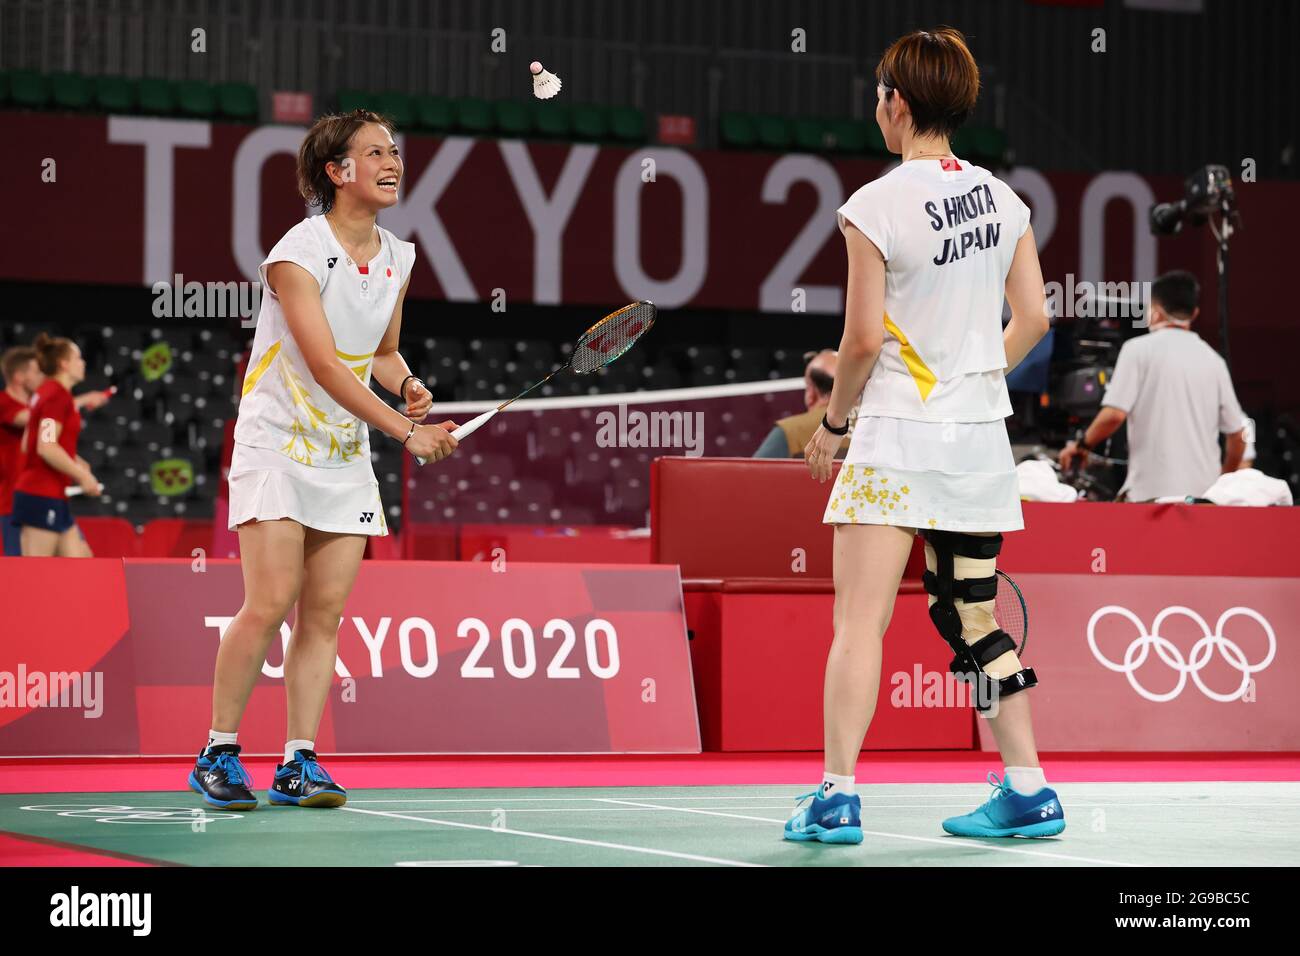 Olympic women double badminton 8 badminton